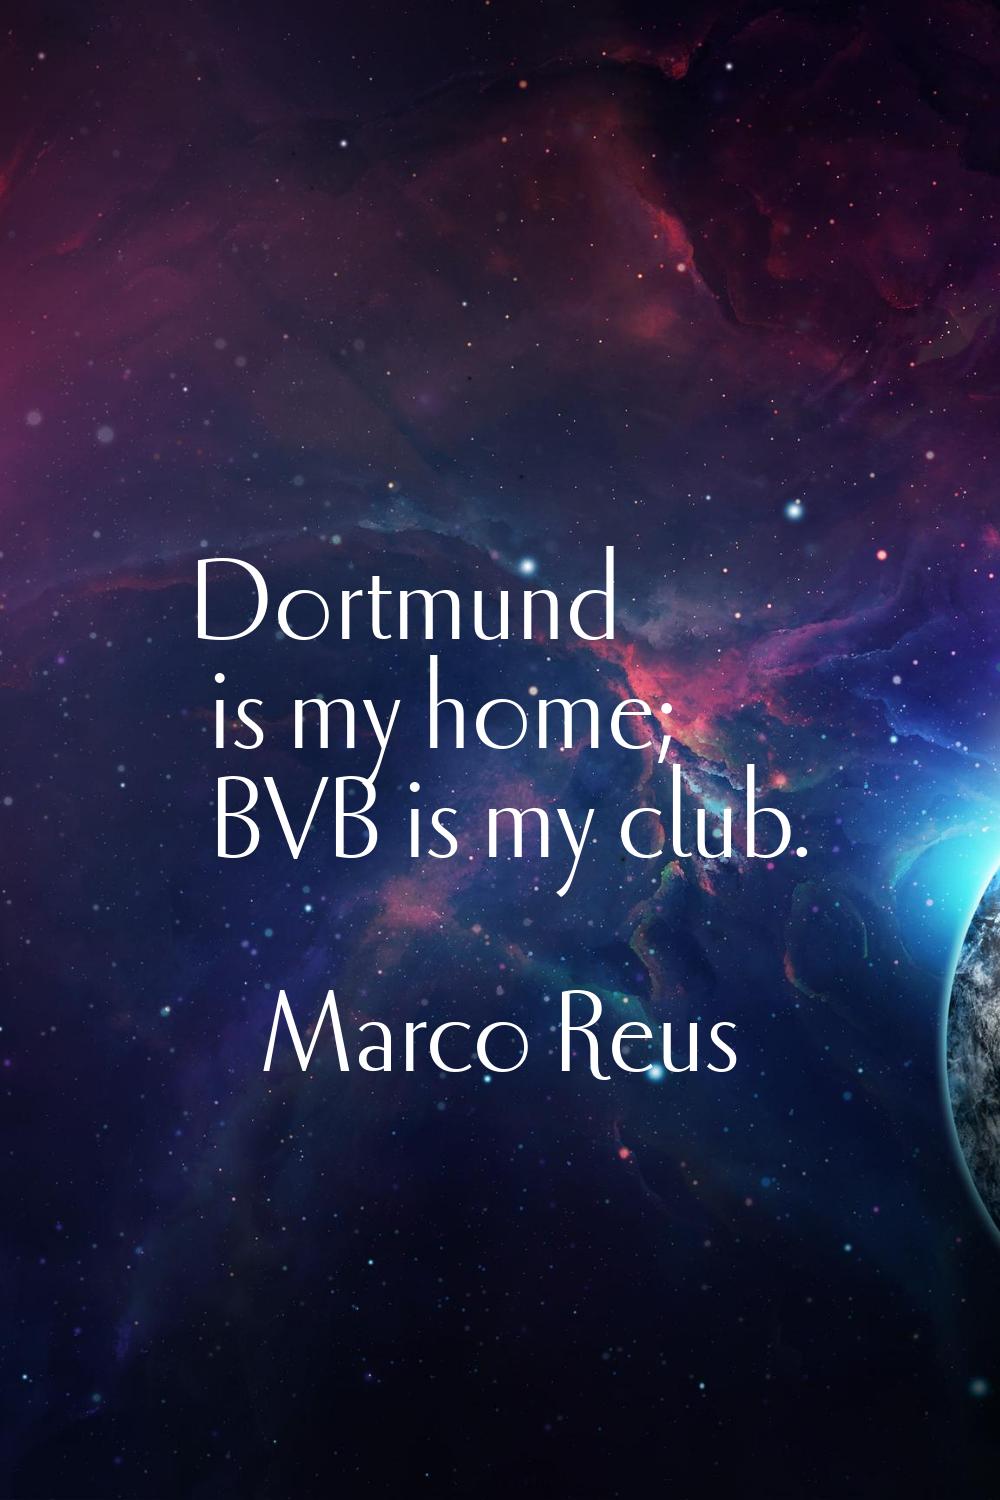 Dortmund is my home; BVB is my club.